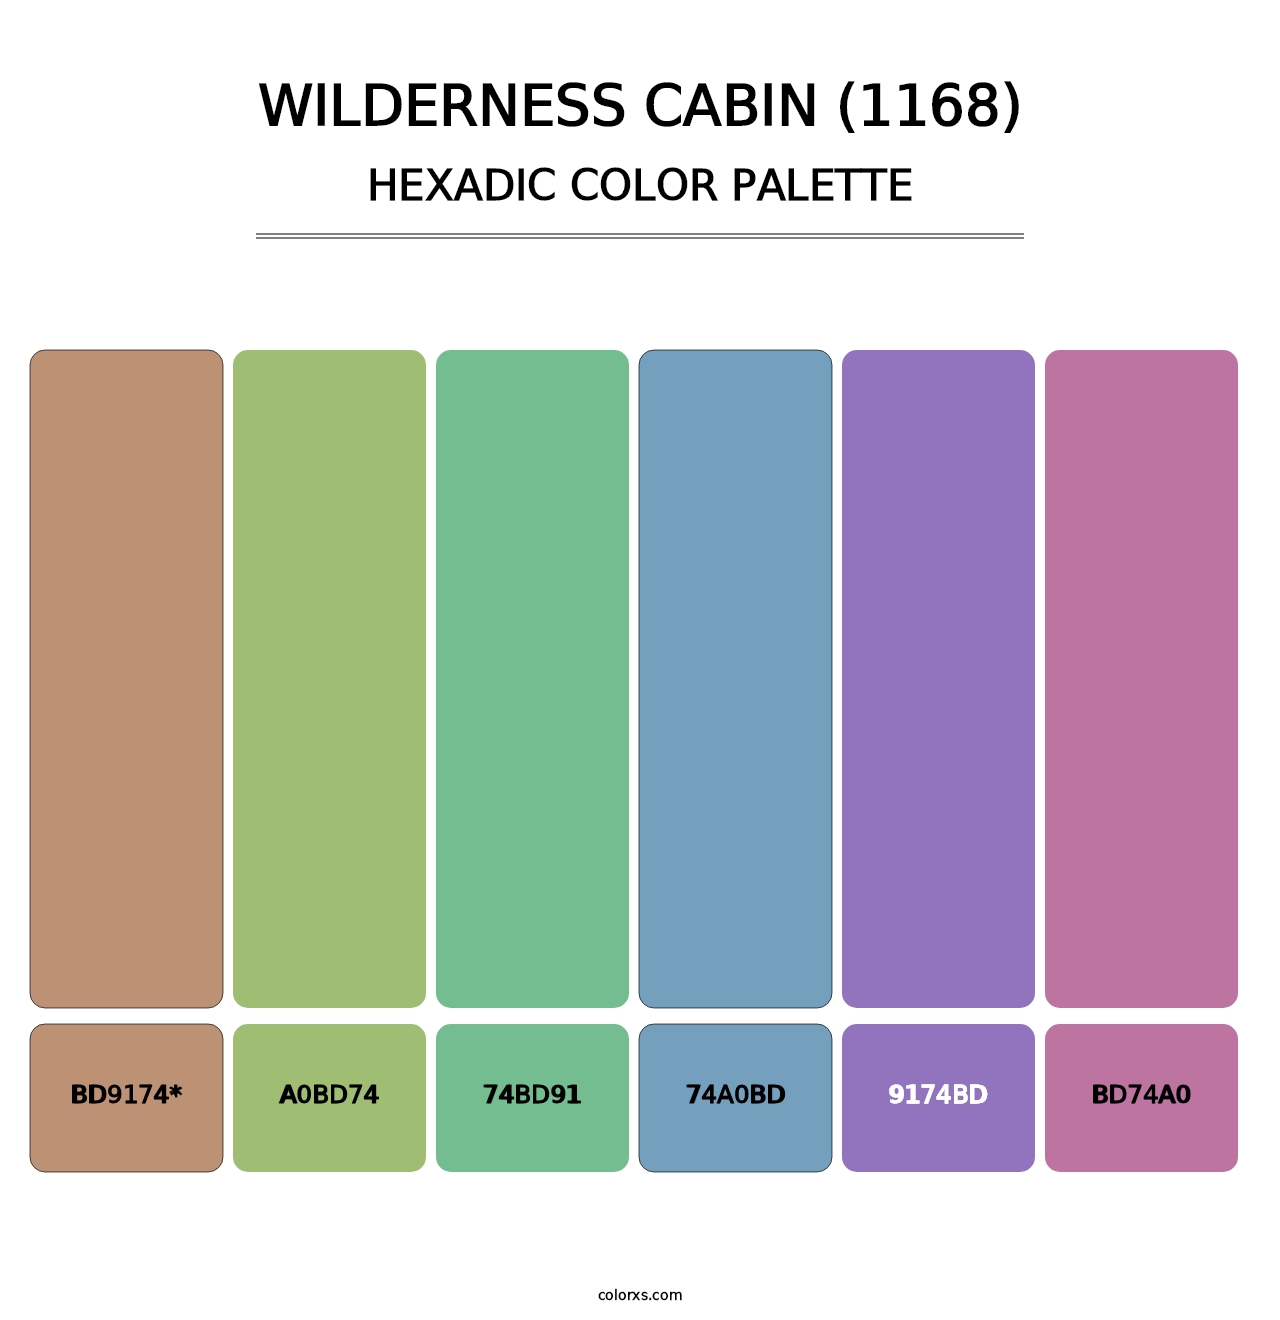 Wilderness Cabin (1168) - Hexadic Color Palette